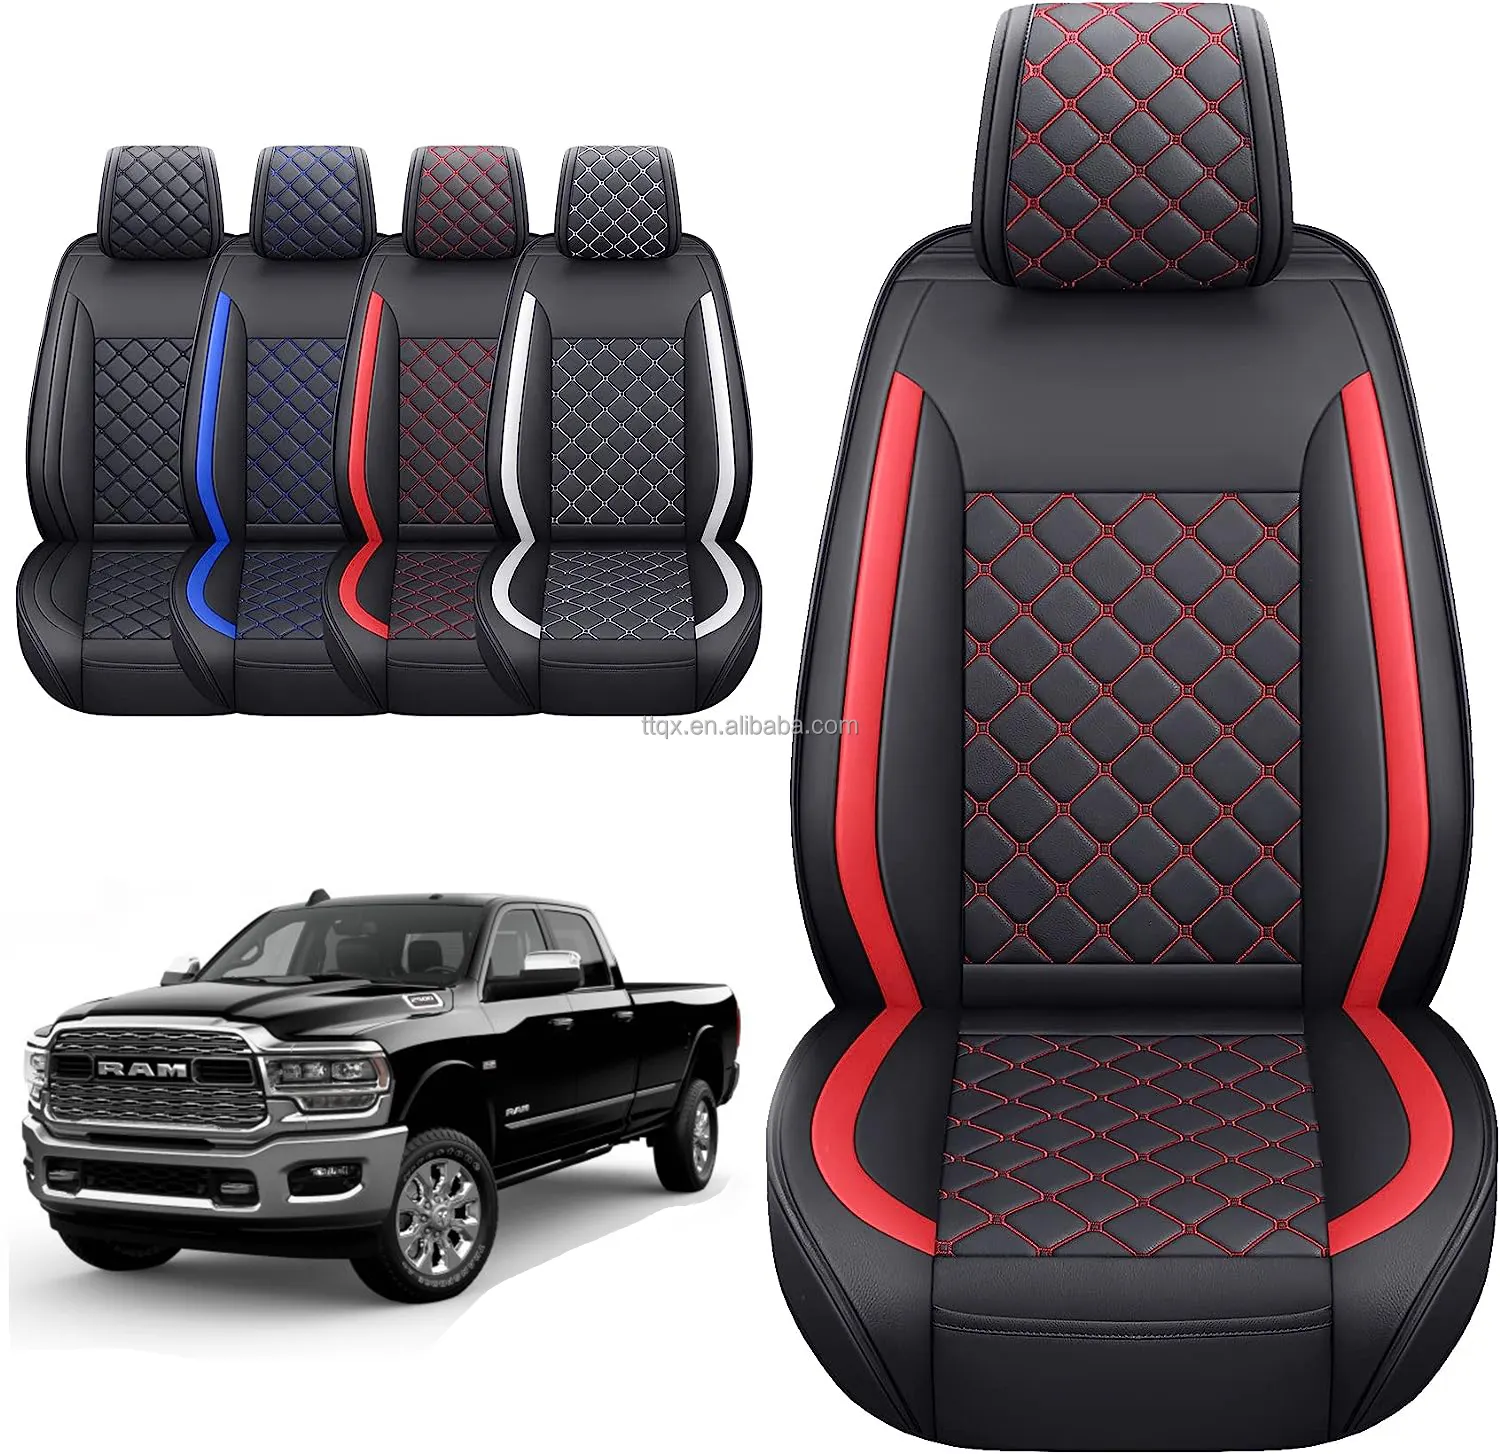 Dodge Ram 1500 Waterproof Vehicle Cushion Cover Full Set Custom Car Seat Covers Original High Quality Leather Durable 1 Set